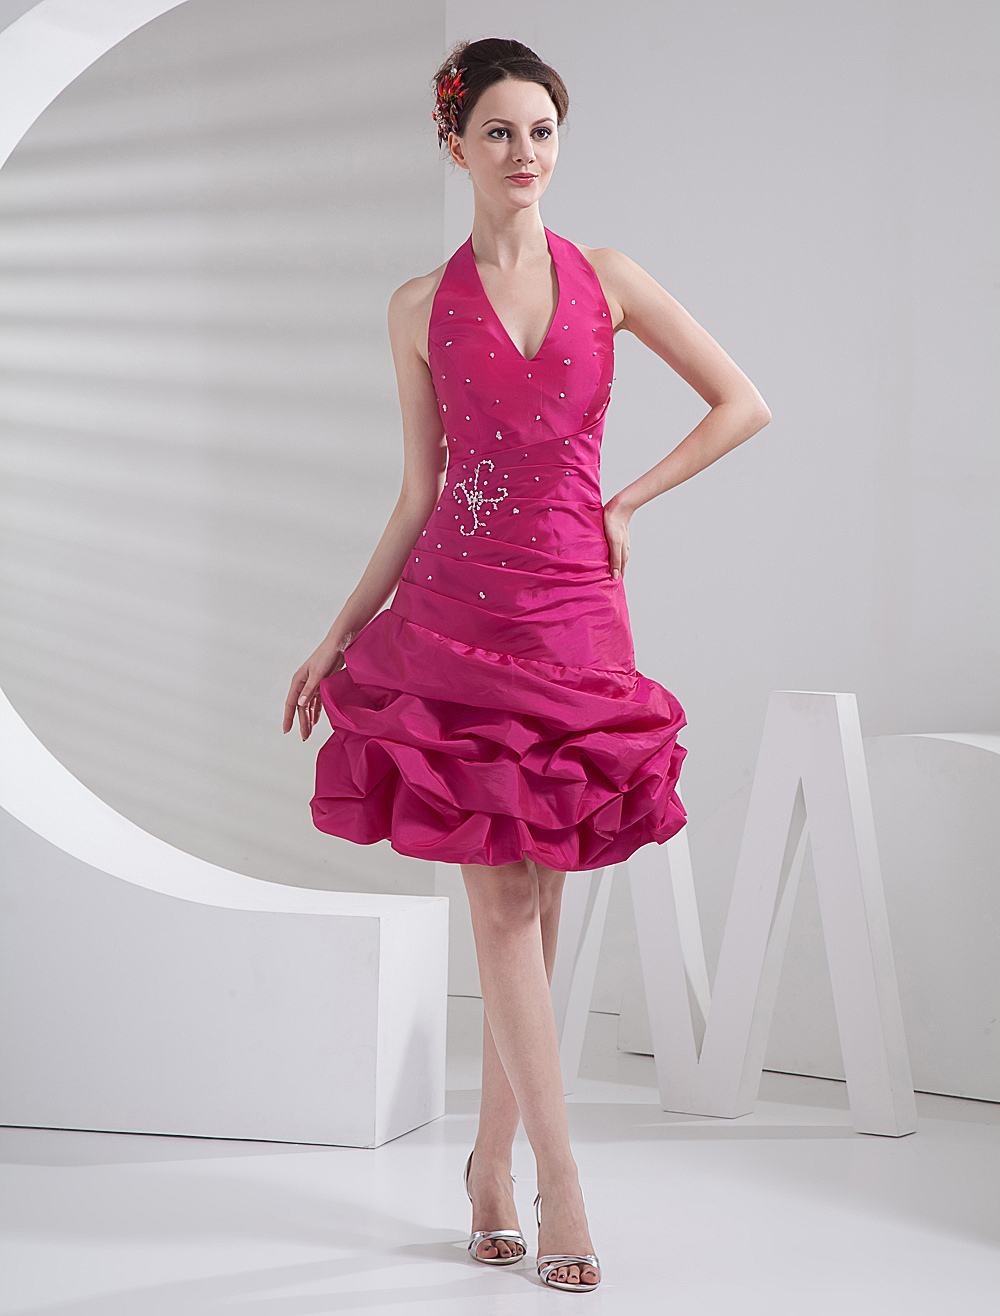 Halter Homecoming Dress A Line Hot Pink Taffeta Beading Mini Prom Dress (Wedding Cheap Party Dress) photo